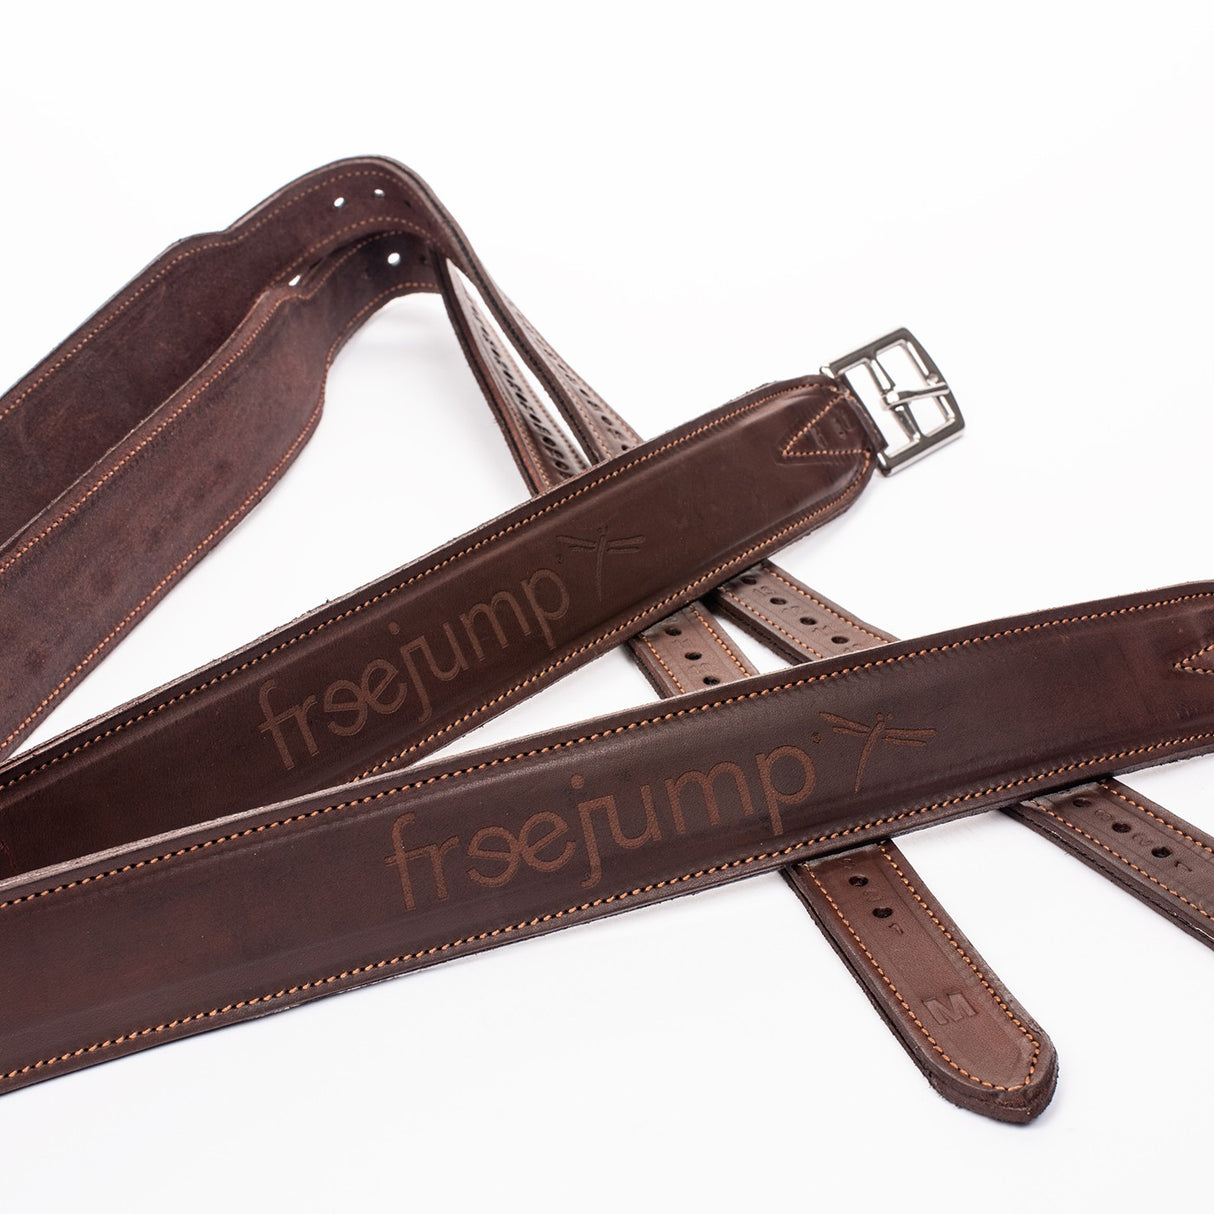 Freejump Classic Wide Stirrup Leathers